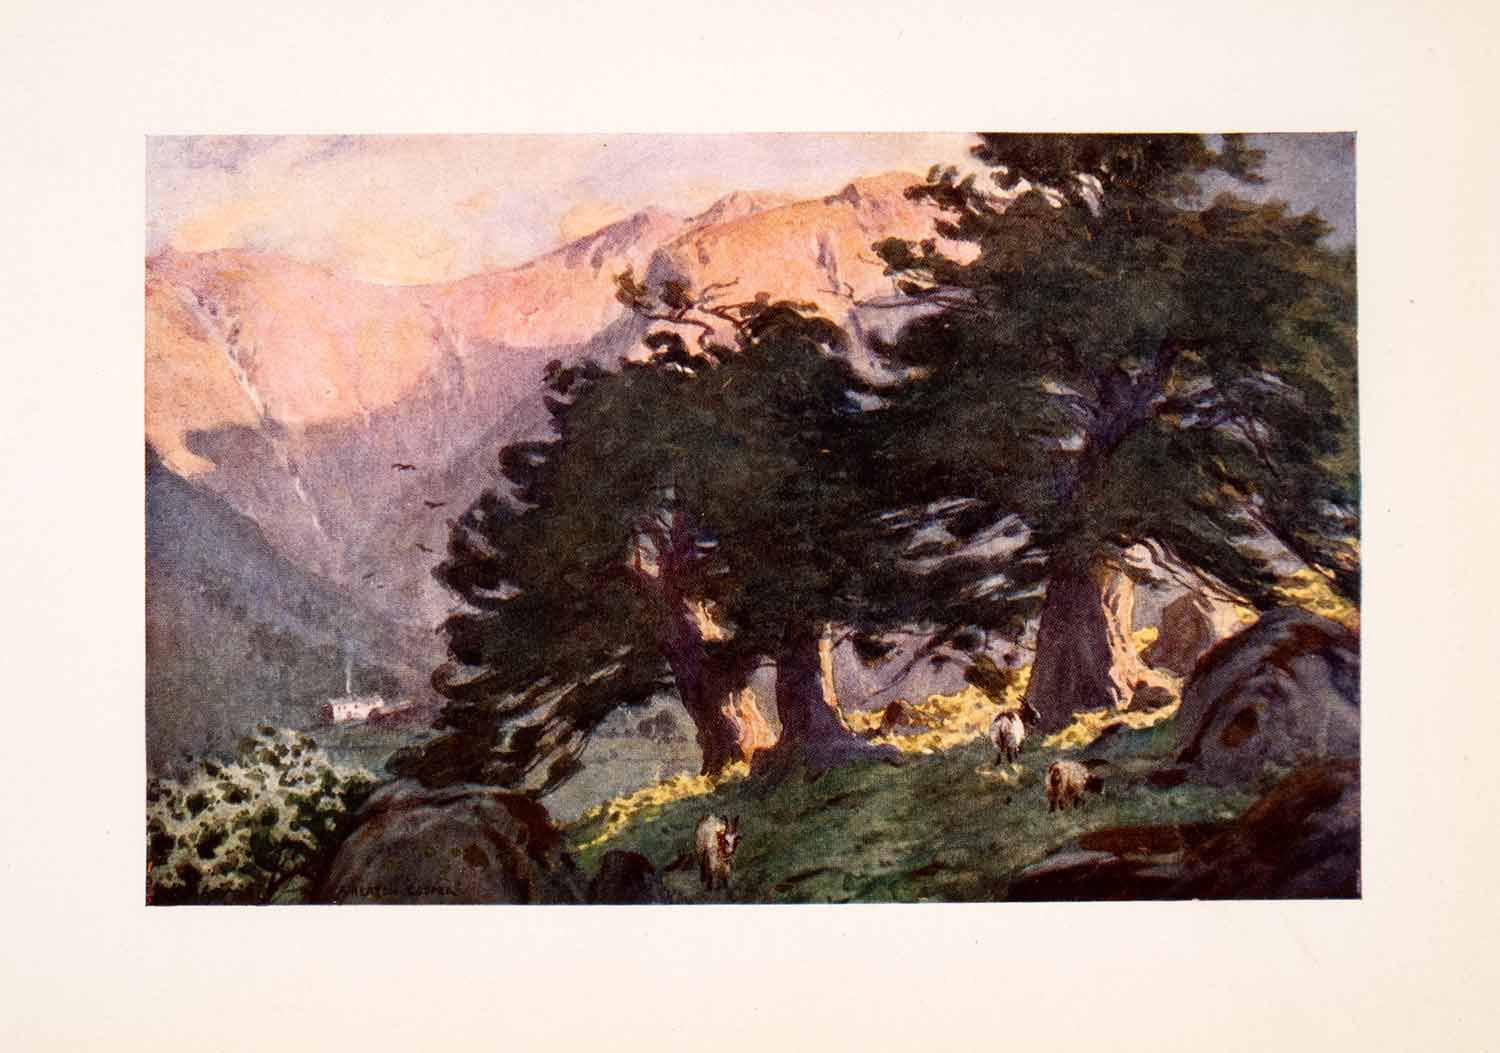 1908 Print Borrowdale Yews Evening England Mountains Animals Rocks XGFA4